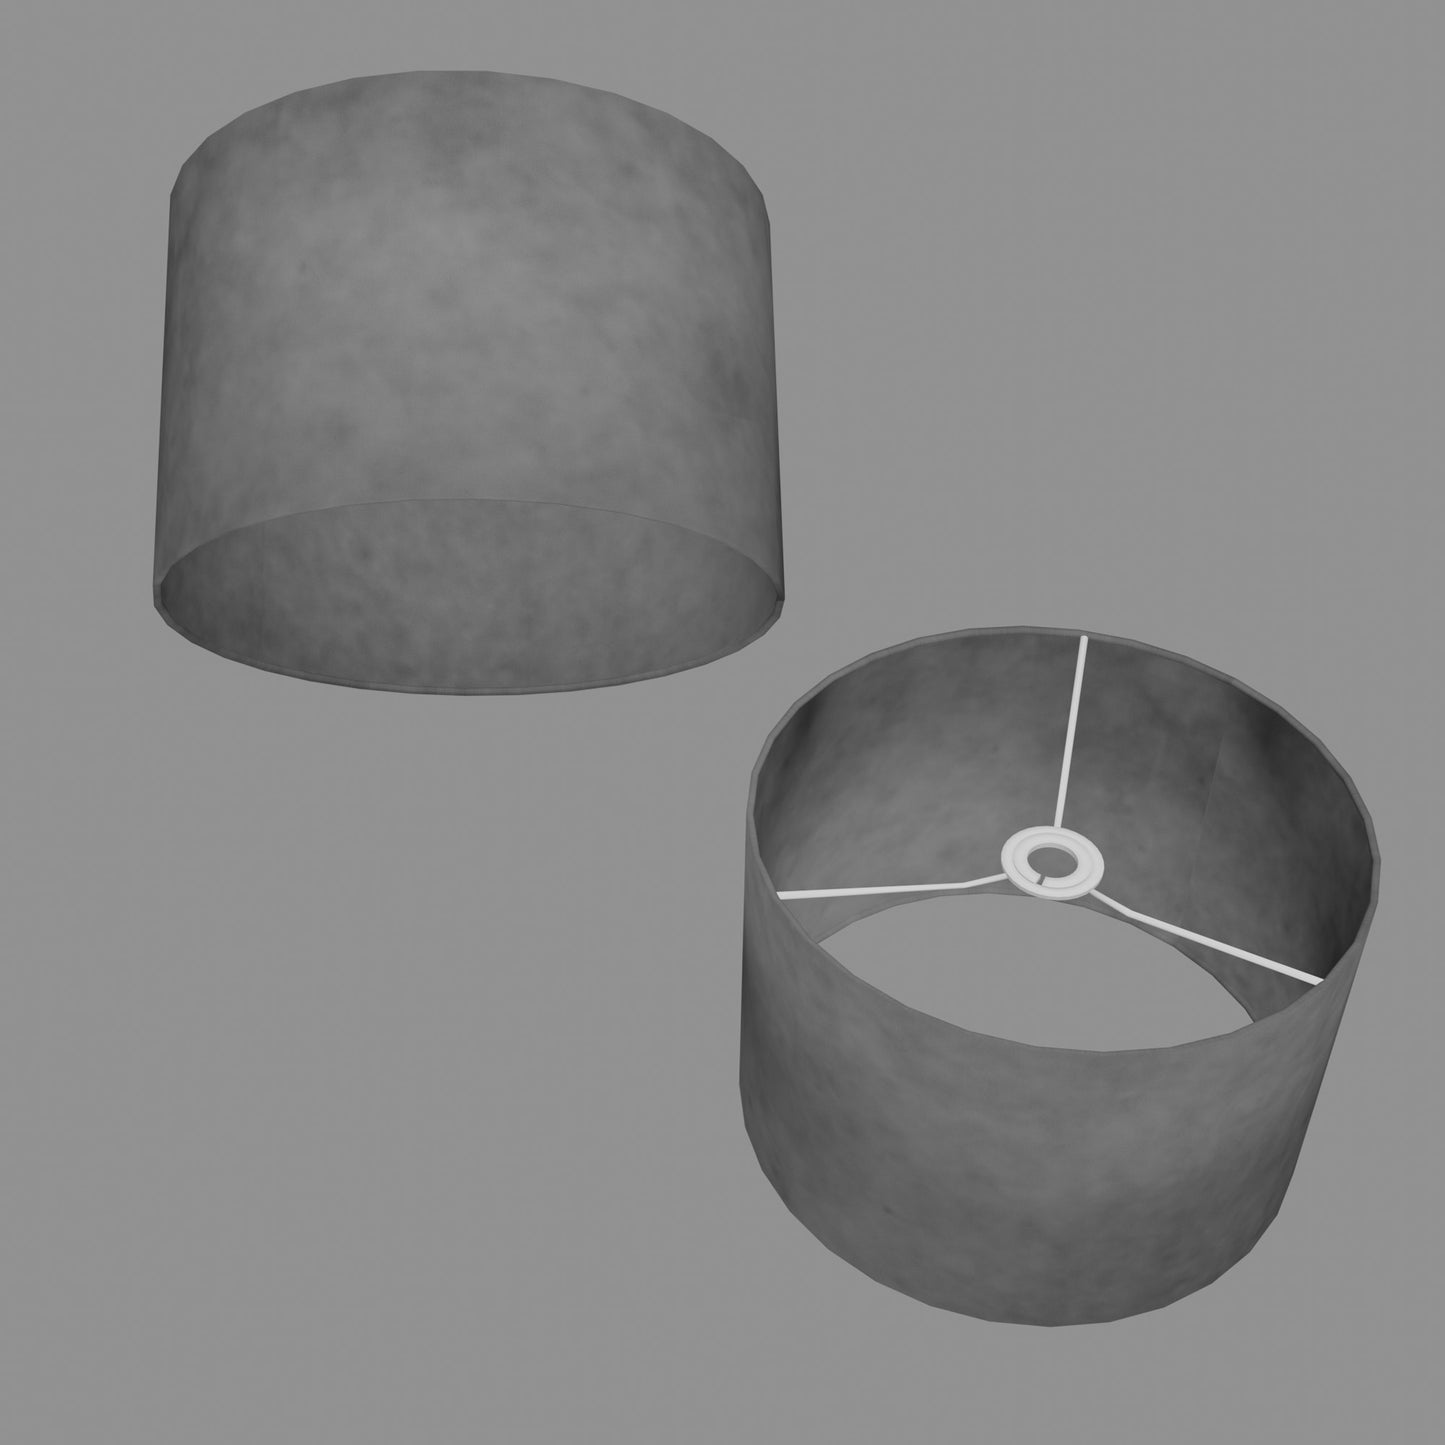 Drum Lamp Shade - P53 - Pewter Grey, 30cm(d) x 20cm(h)